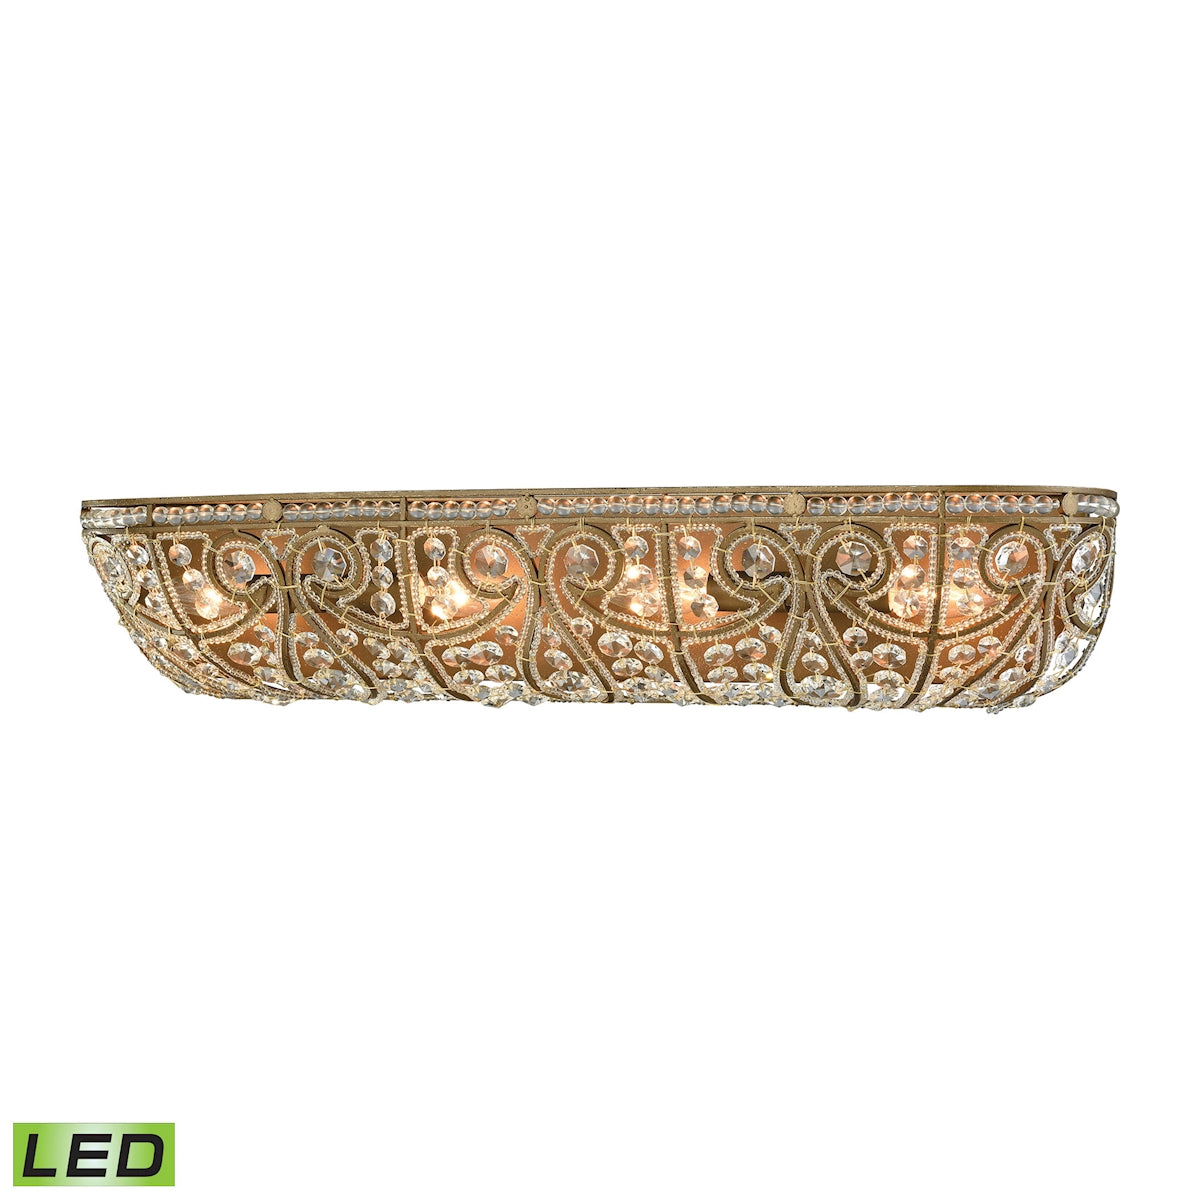 ELK Lighting 15961/4-LED Elizabethan 4-Light Vanity Sconce in Dark Bronze with Clear Crystal - Includes LED Bulbs